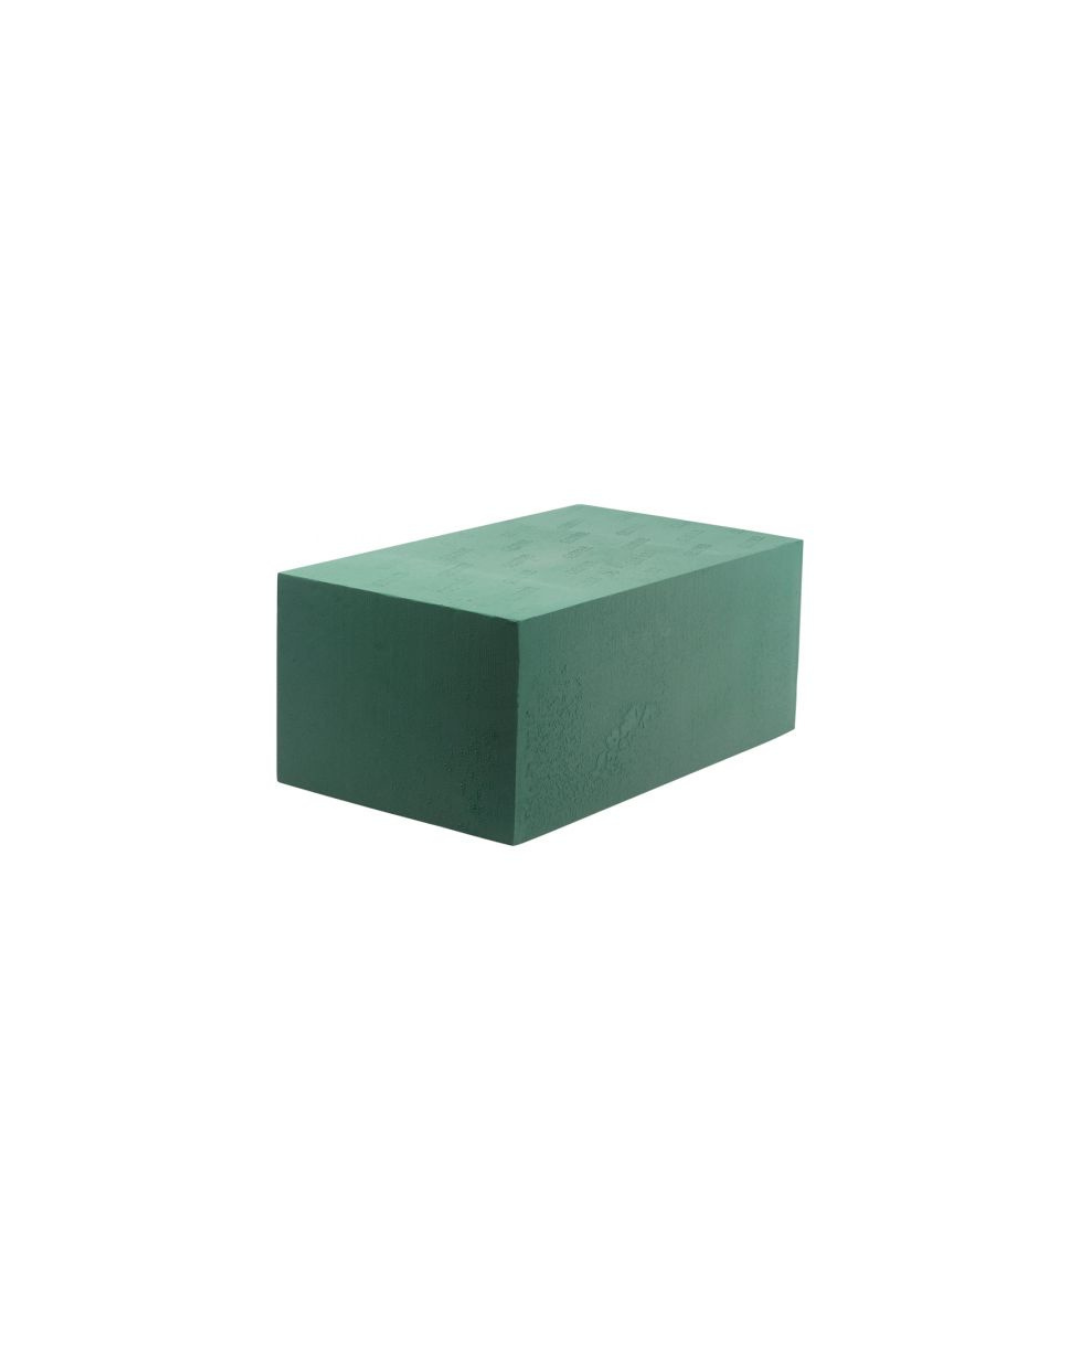 Wet Foam Box of 1 Brick